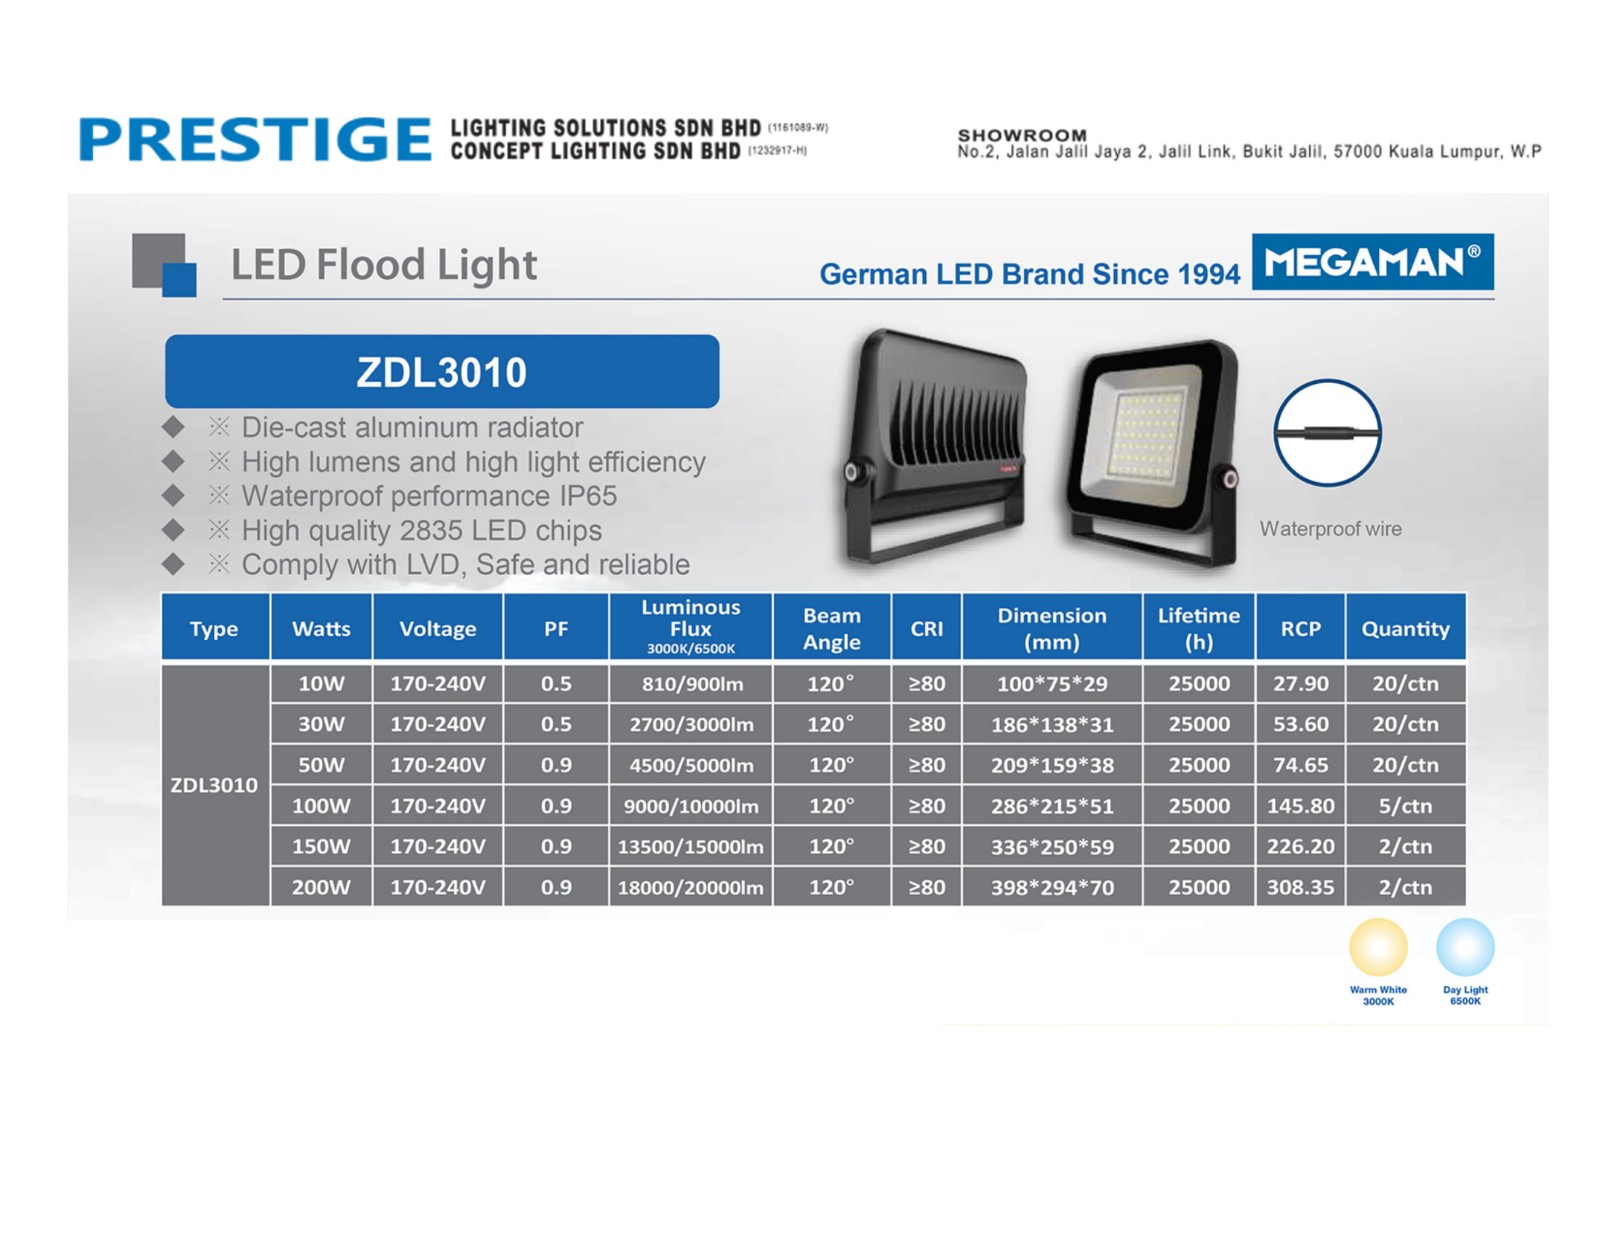 LED FloodLight Series